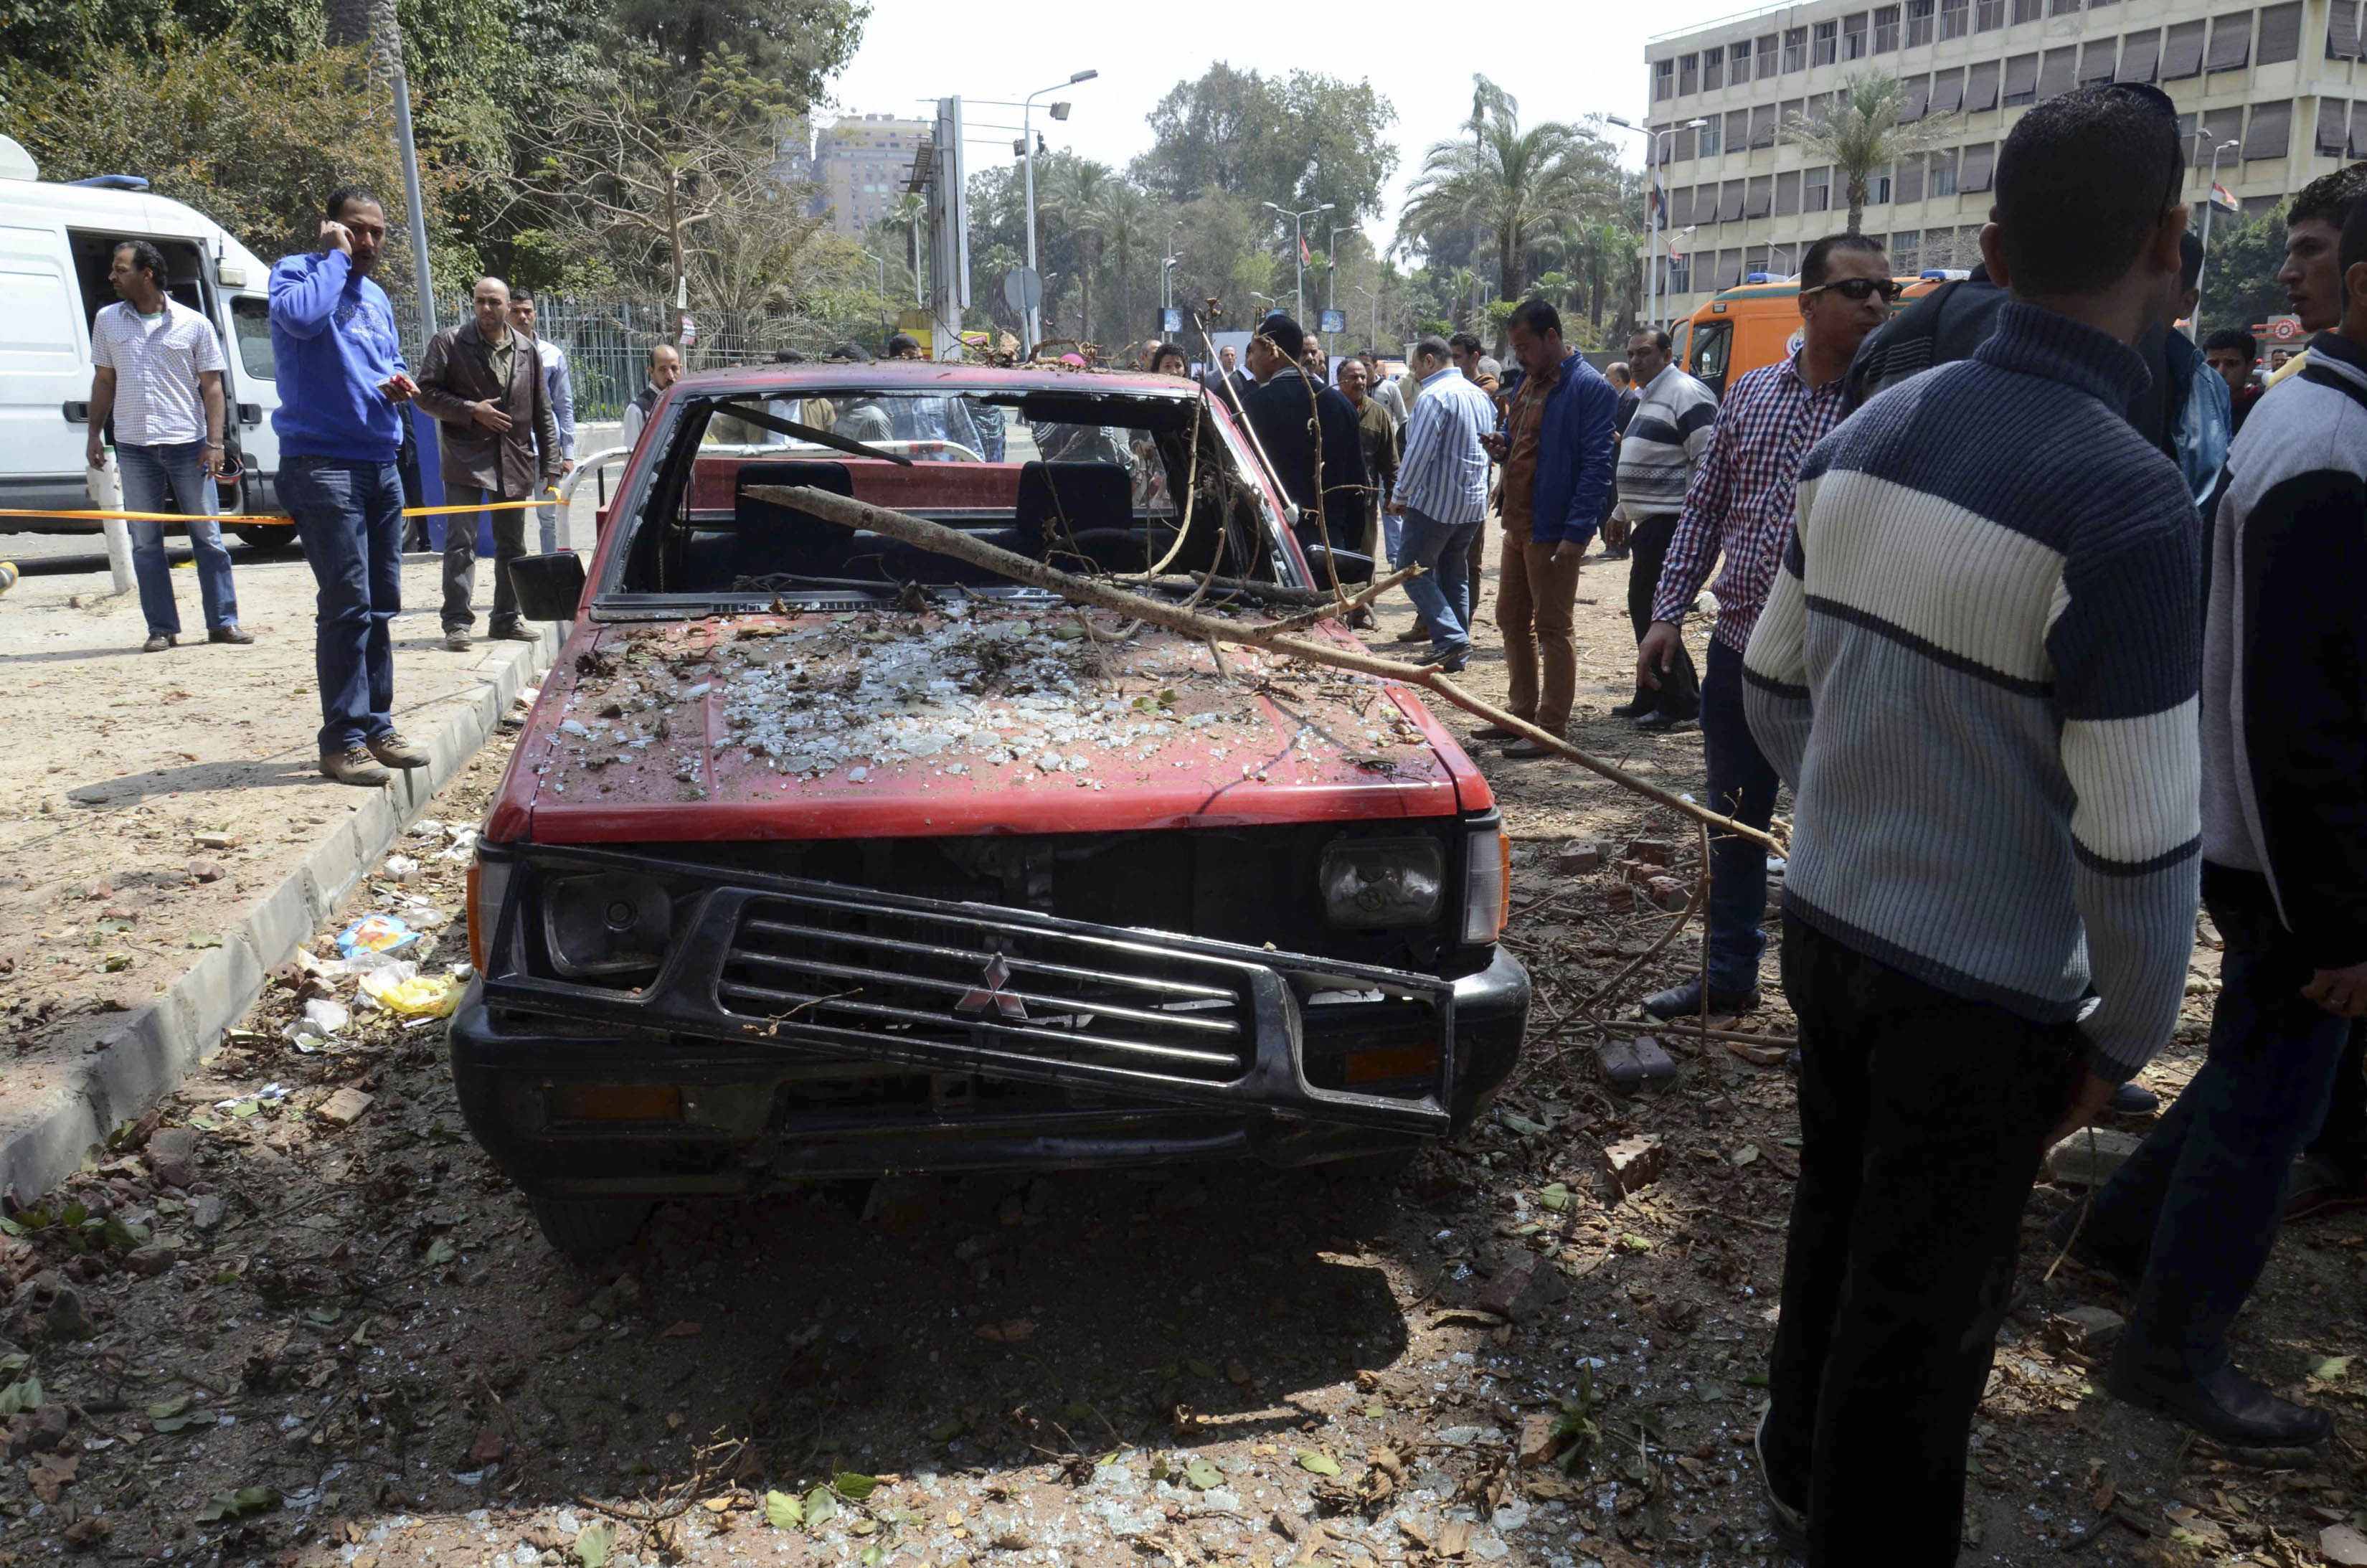 8 injured in Qalyubia blast - health ministry